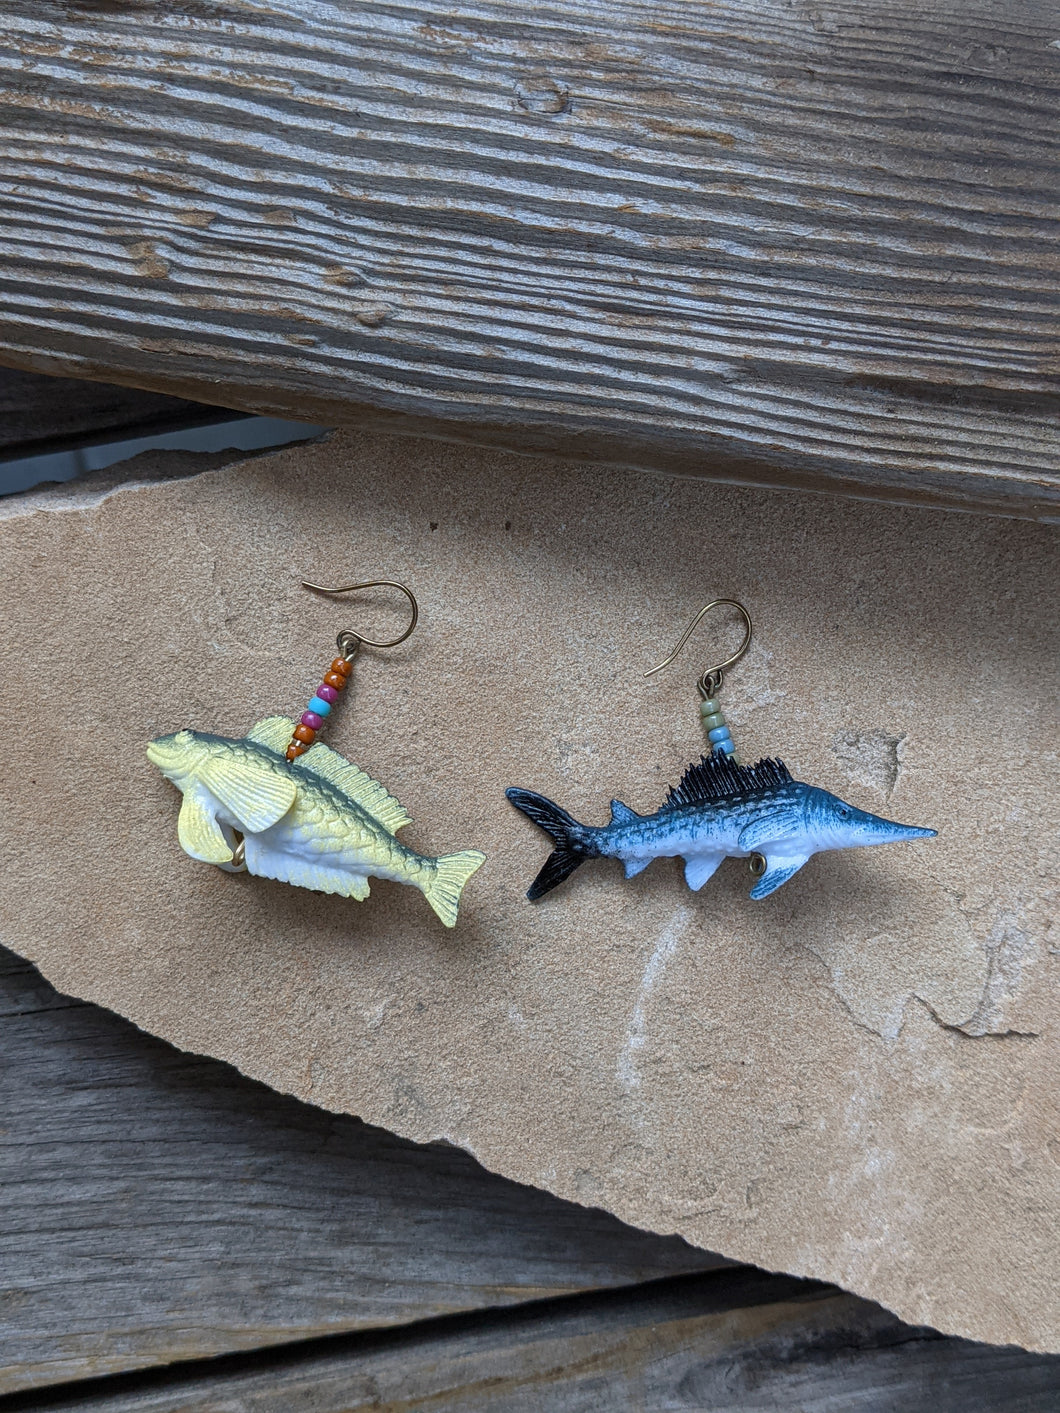 Sailfish + Gulf Kingfish Earrings